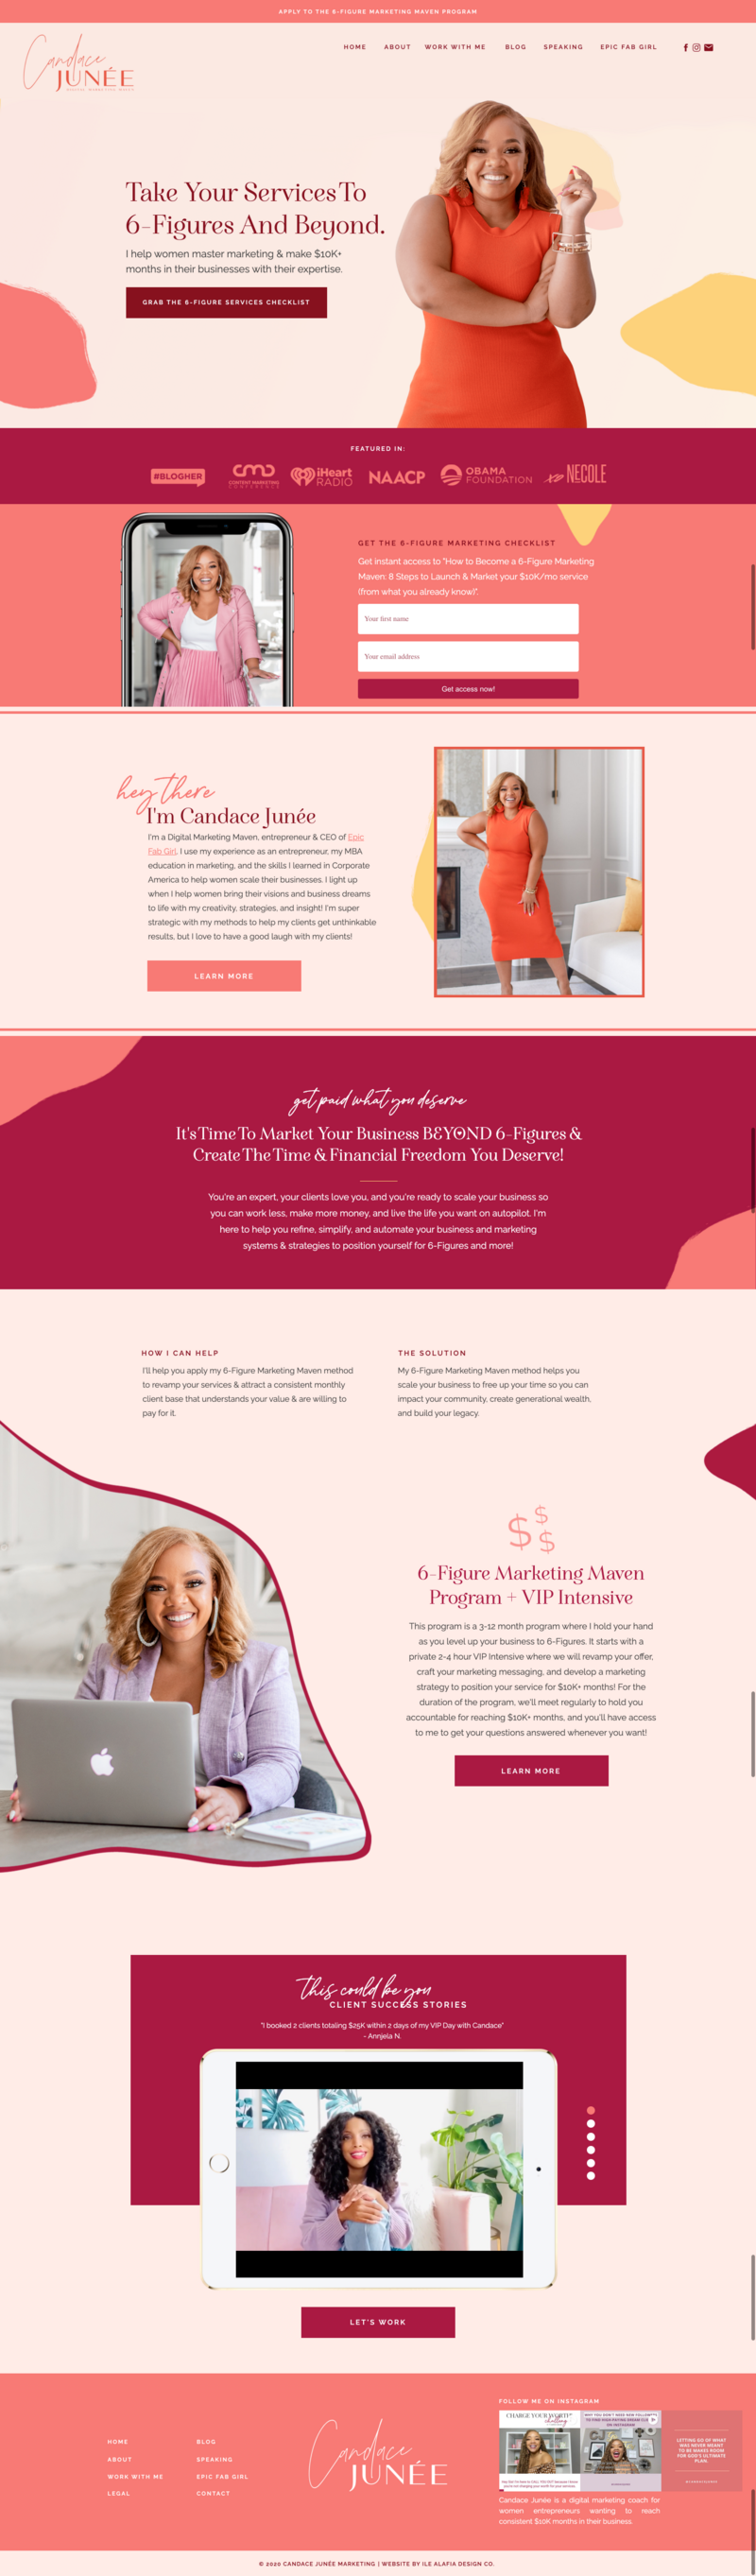 mockup of showit website design for a marketing business coach smiling in an orange dress